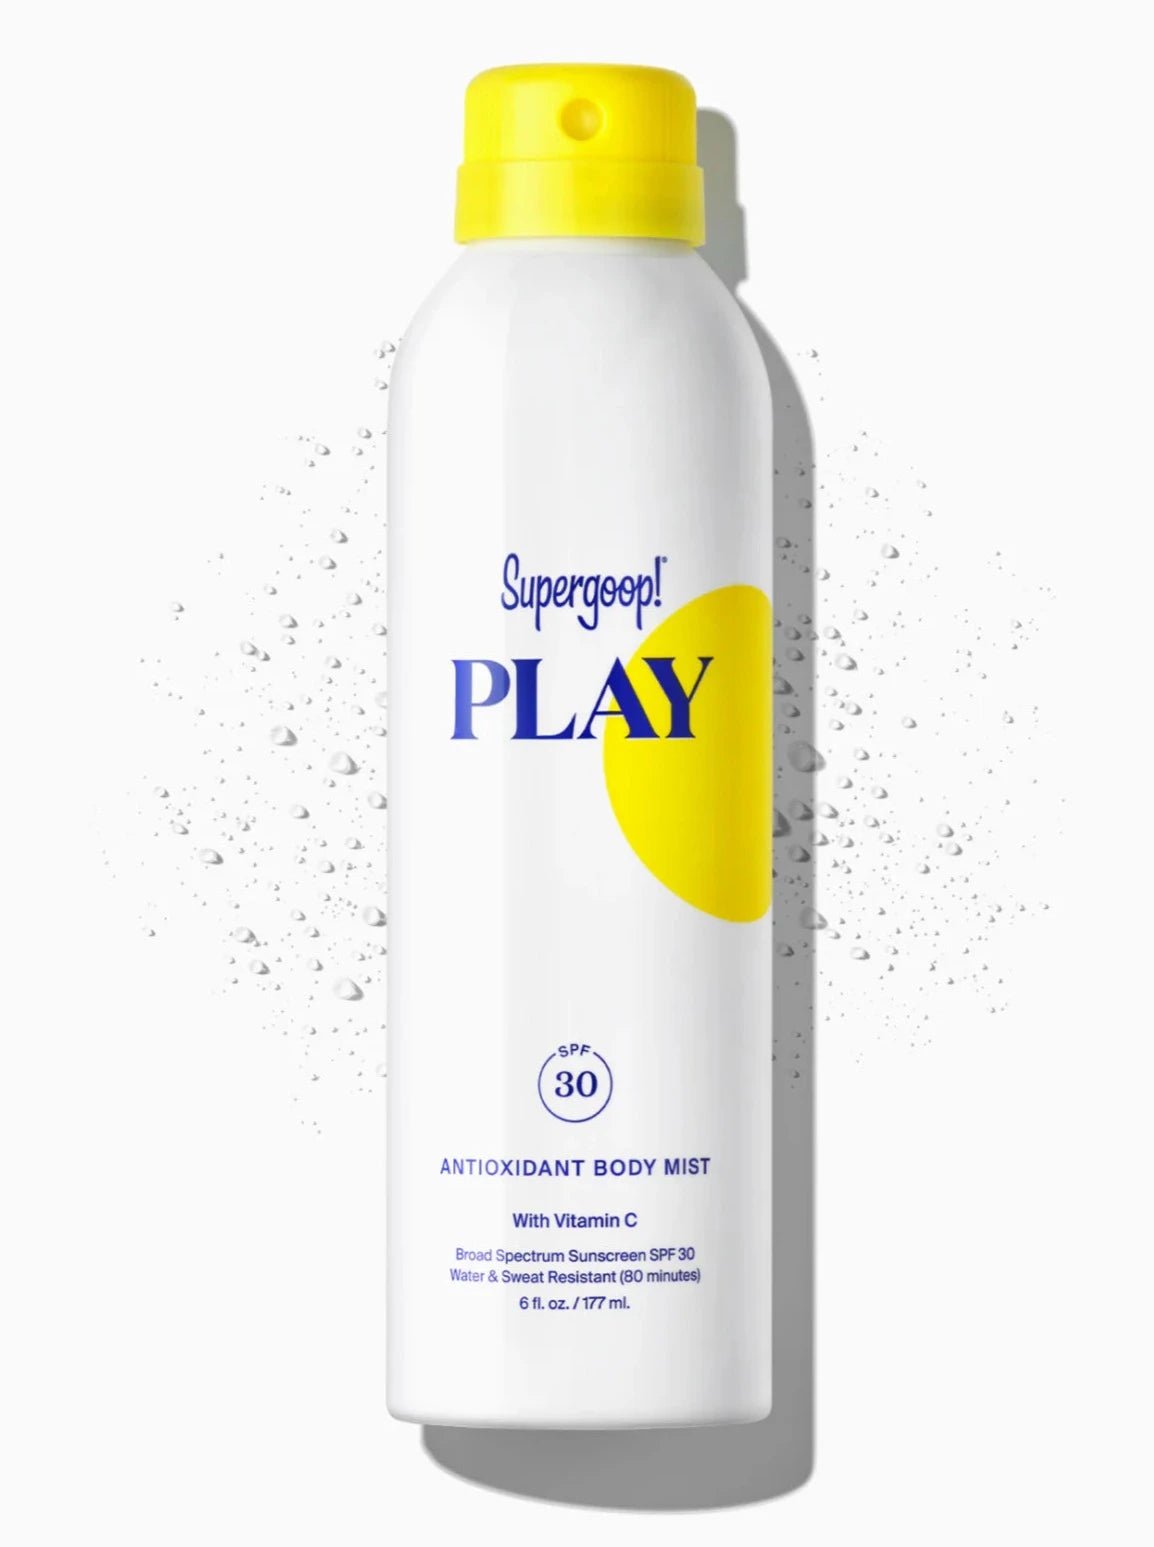 Supergoop! PLAY Antioxidant Body Mist SPF 30 with Vitamin C - 30A Gear - novelty misc